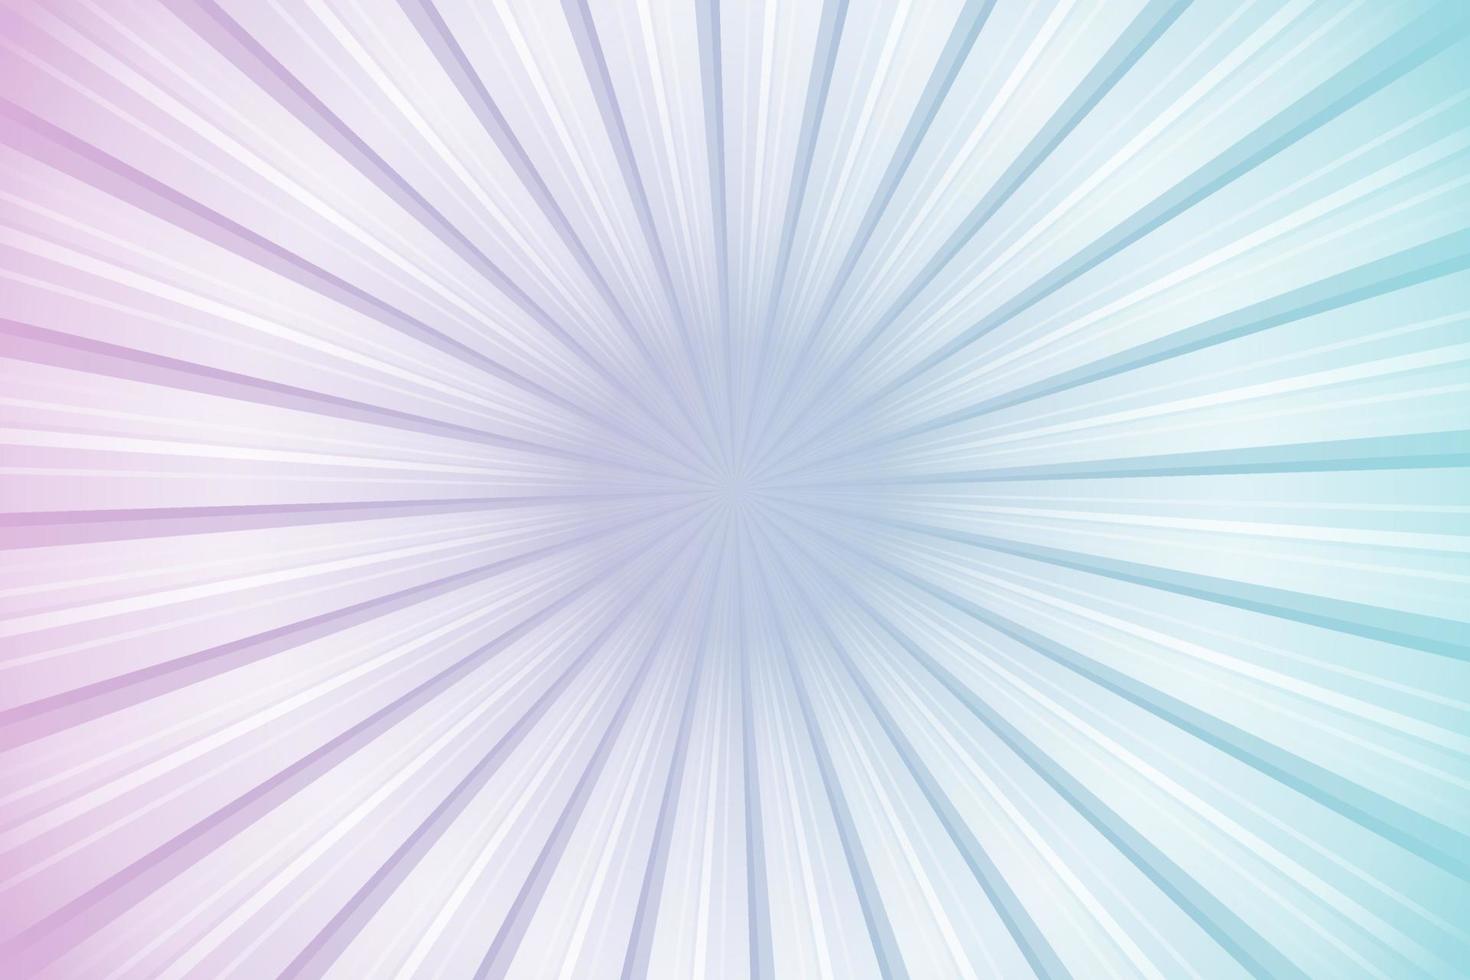 Sunburst pattern rays gradient abstract background. Vector illustration